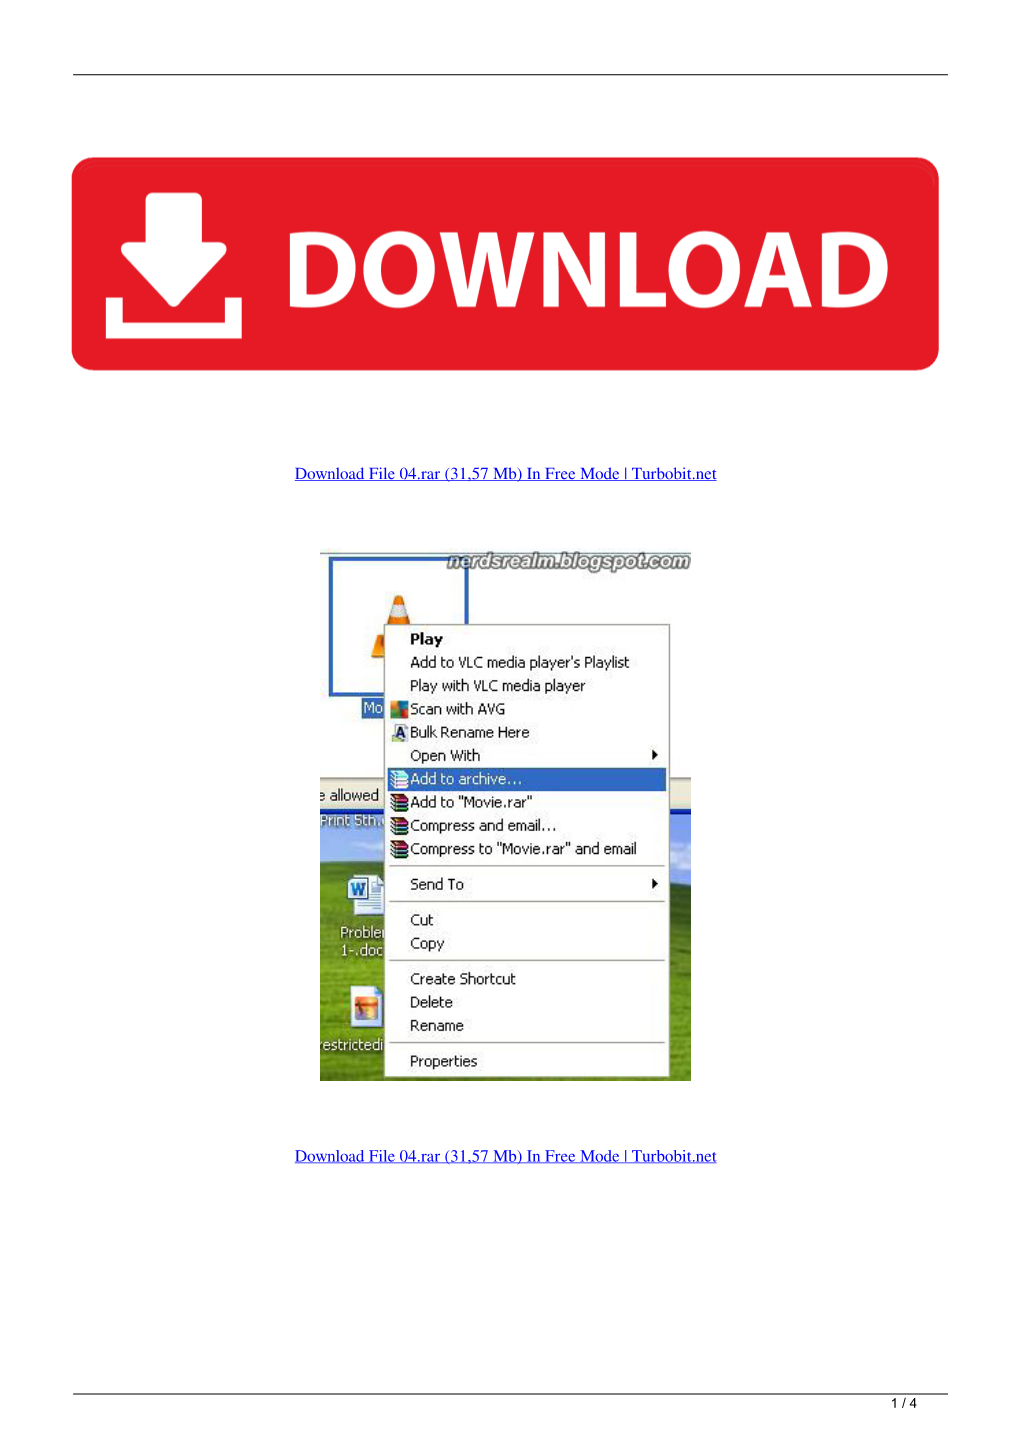 Download File 04Rar 3157 Mb in Free Mode Turbobitnet